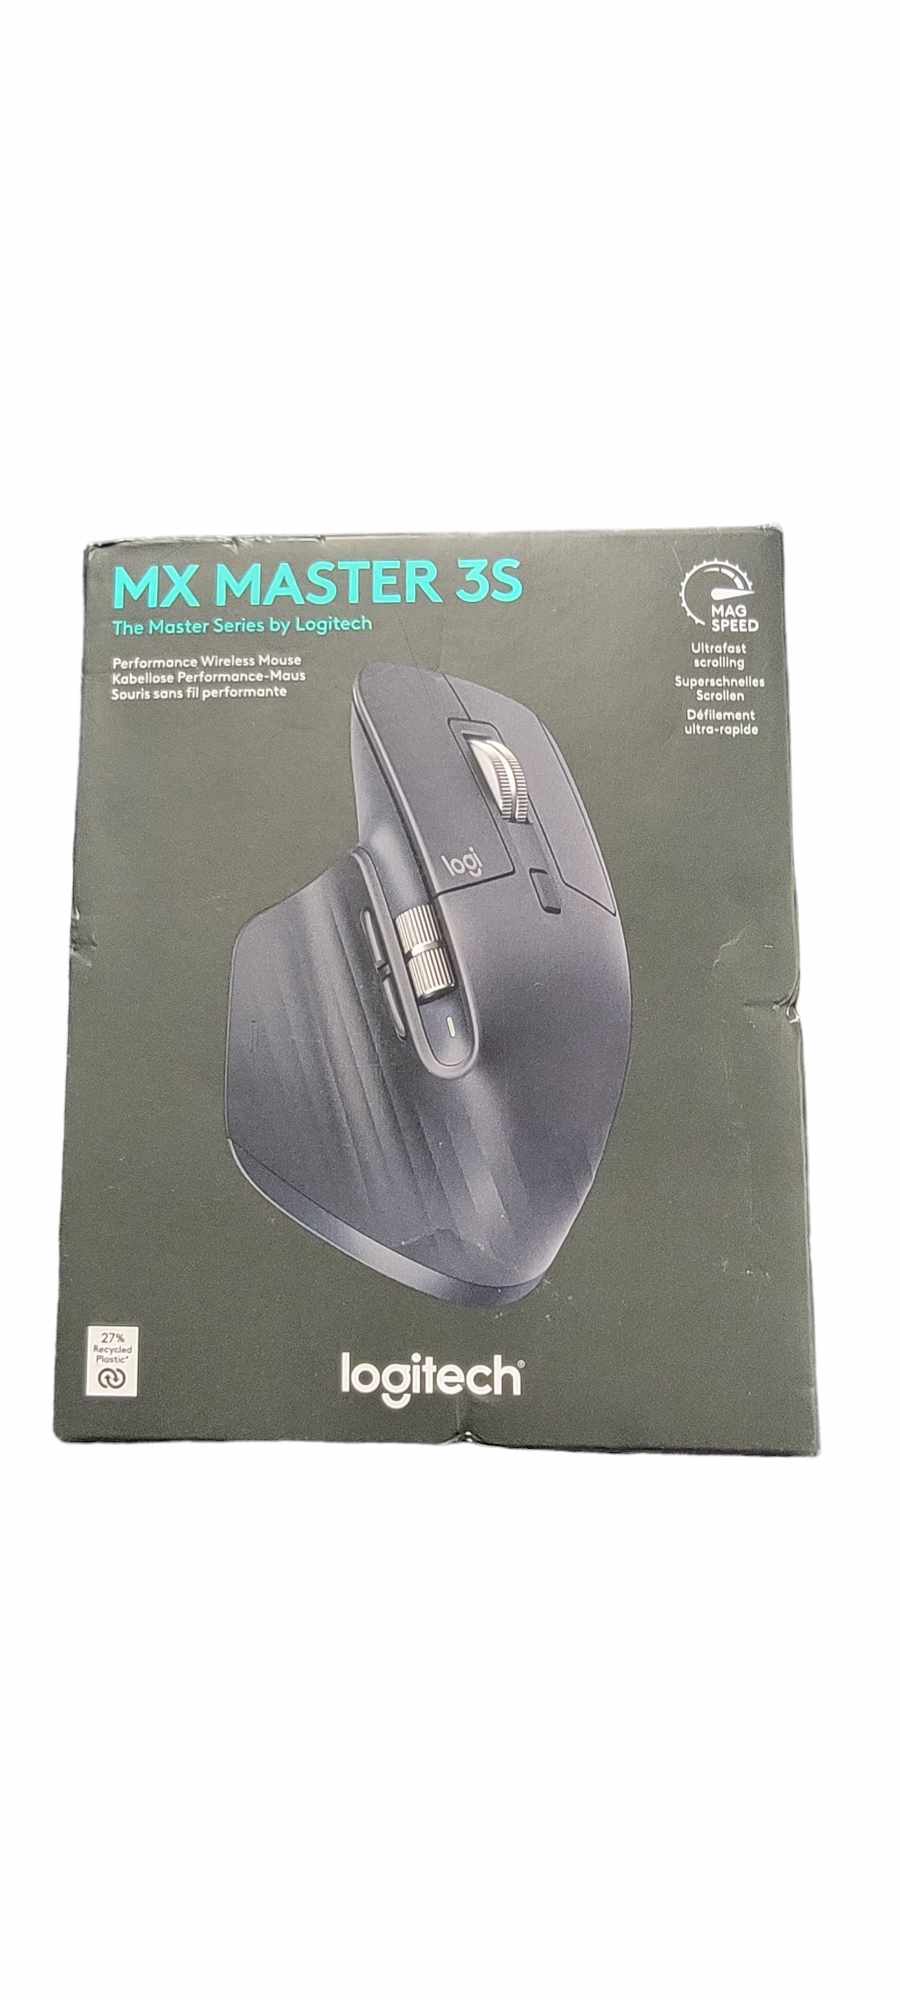 MX Master 3S Logitech Mouse